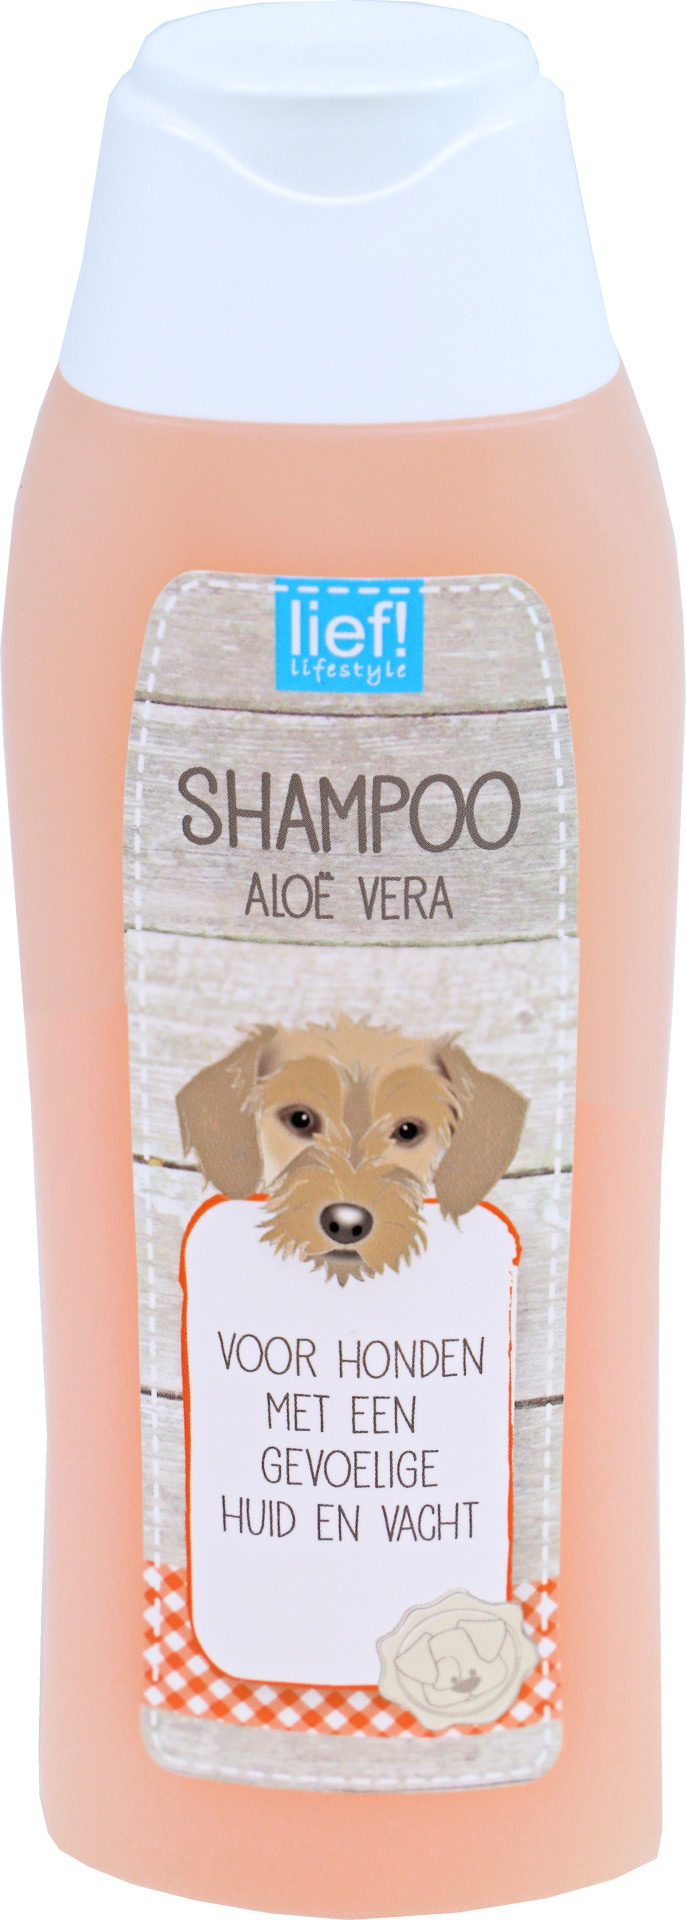 lief! lifestyle shampoo Gevoelige Huid 300 ml